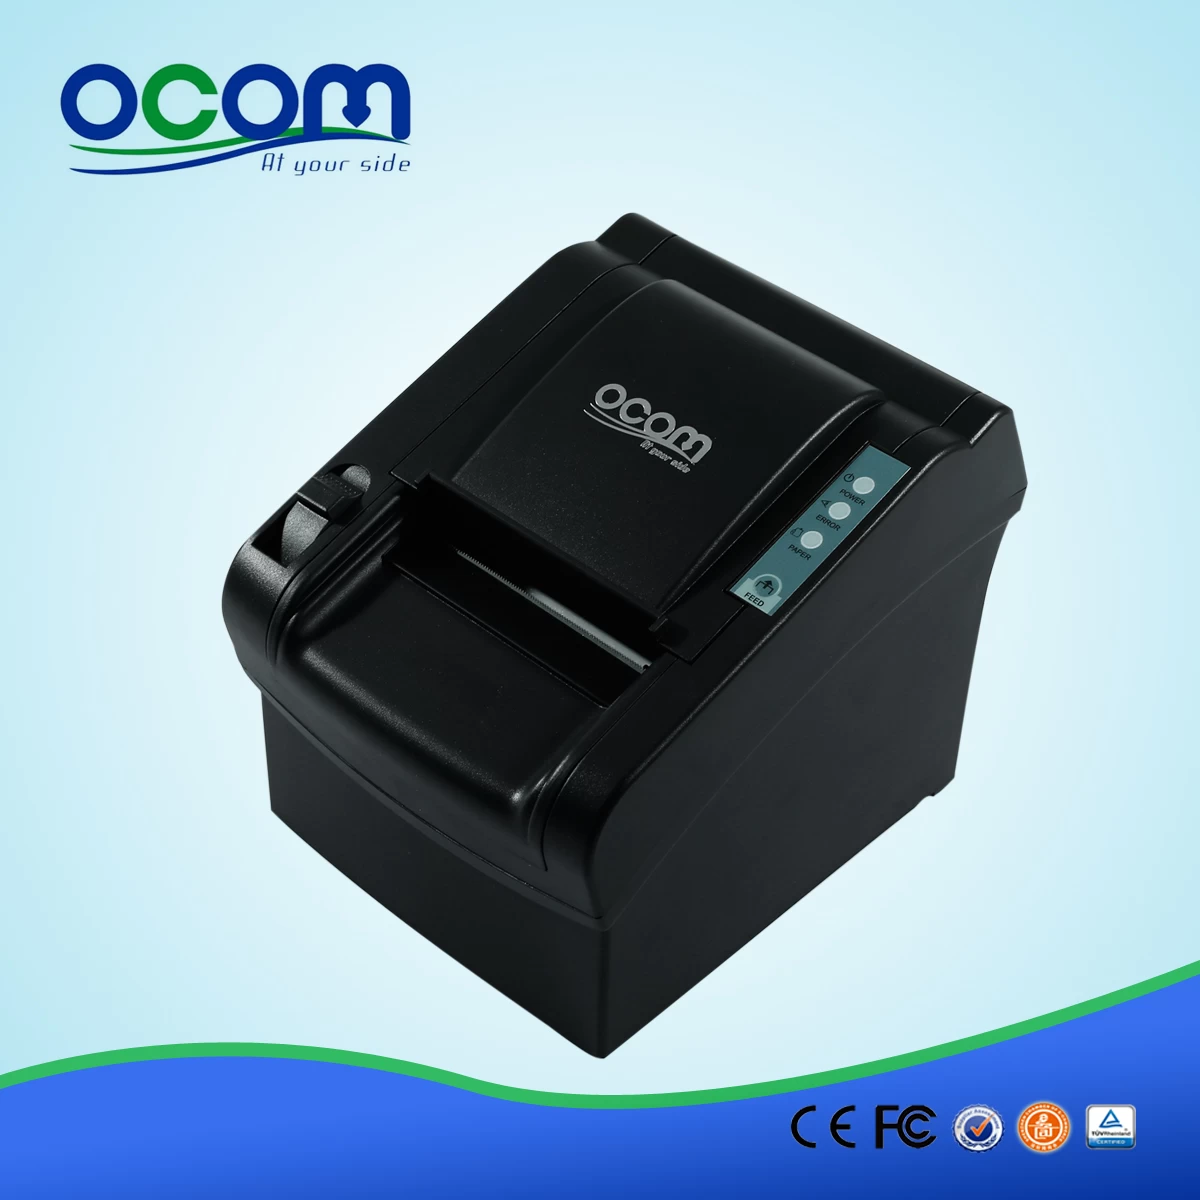 OCPP-802: supply cheap thermal printer module, thermal printer price in india